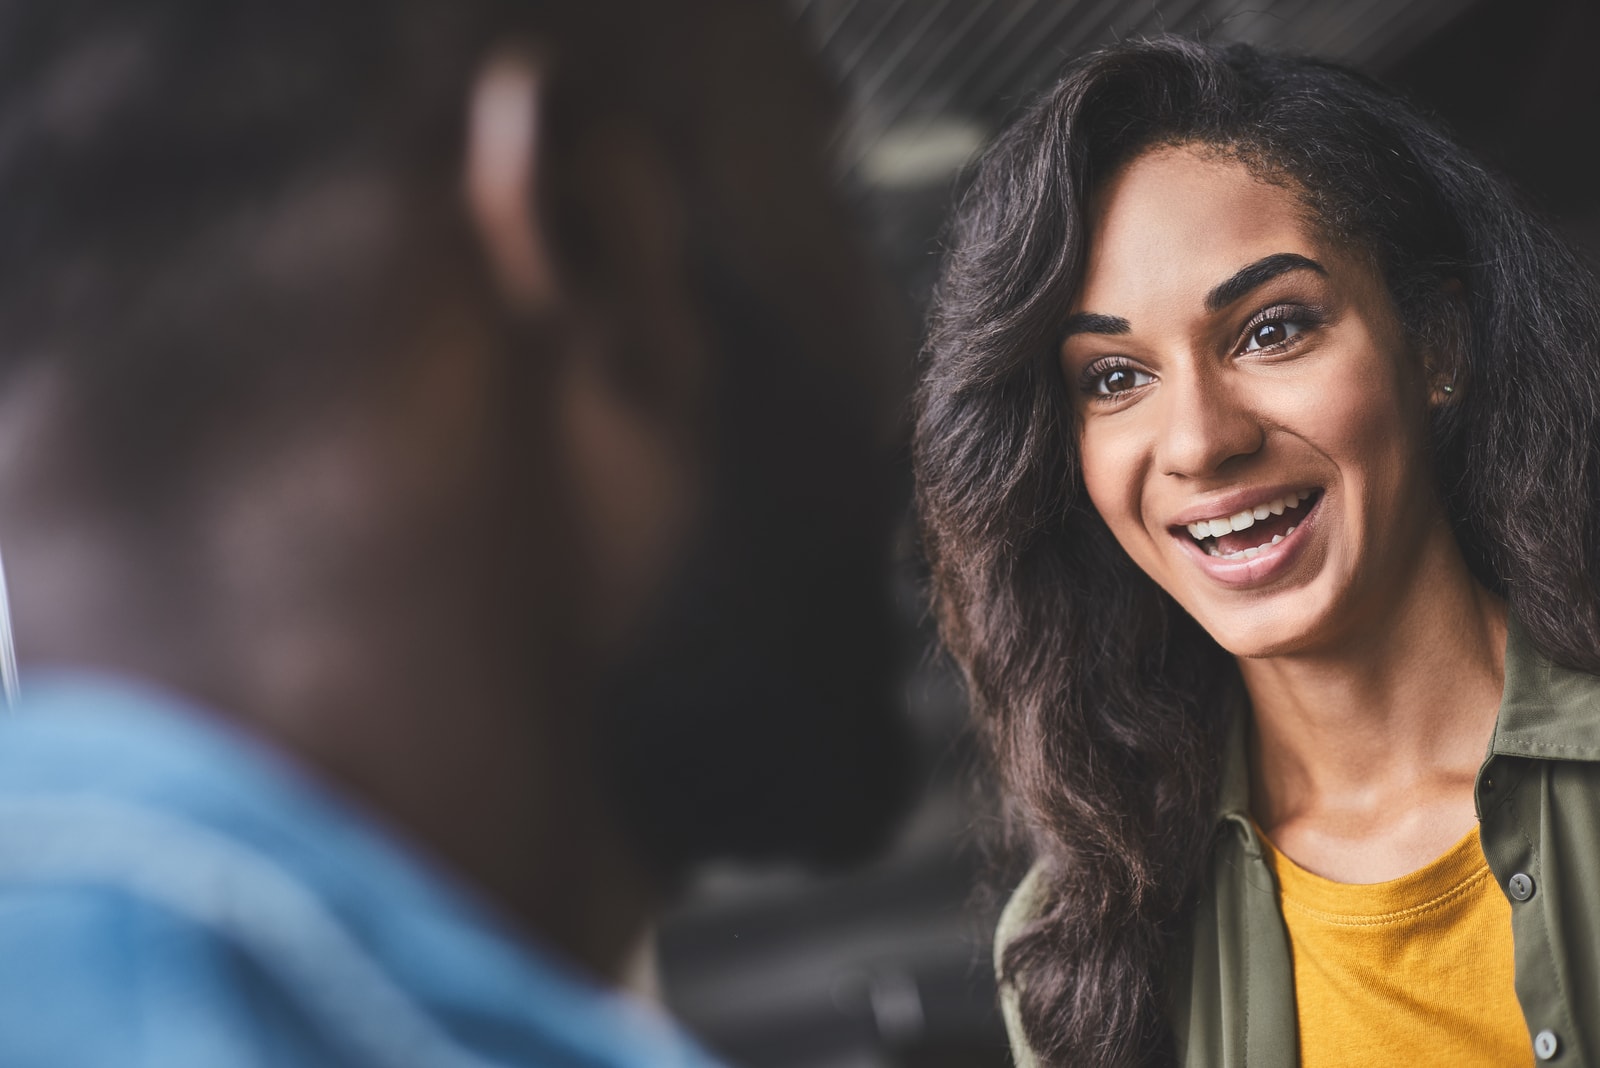 a smiling black woman talks to a man